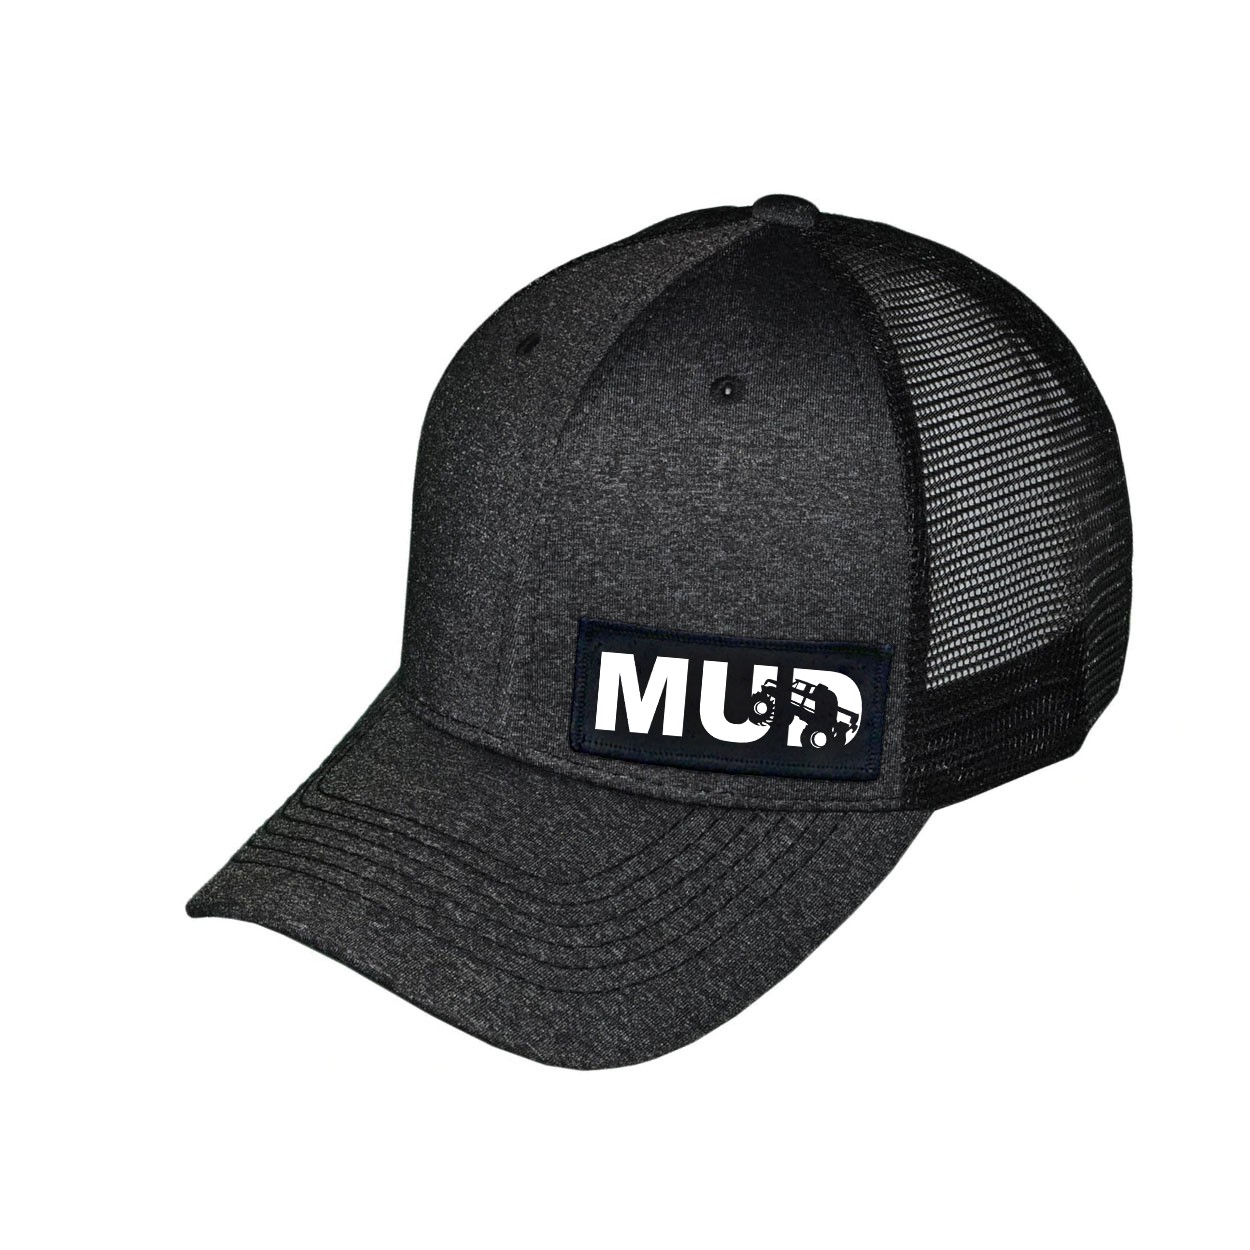 Mud Truck Logo Night Out Woven Patch Melange Snapback Trucker Hat Black (White Logo)